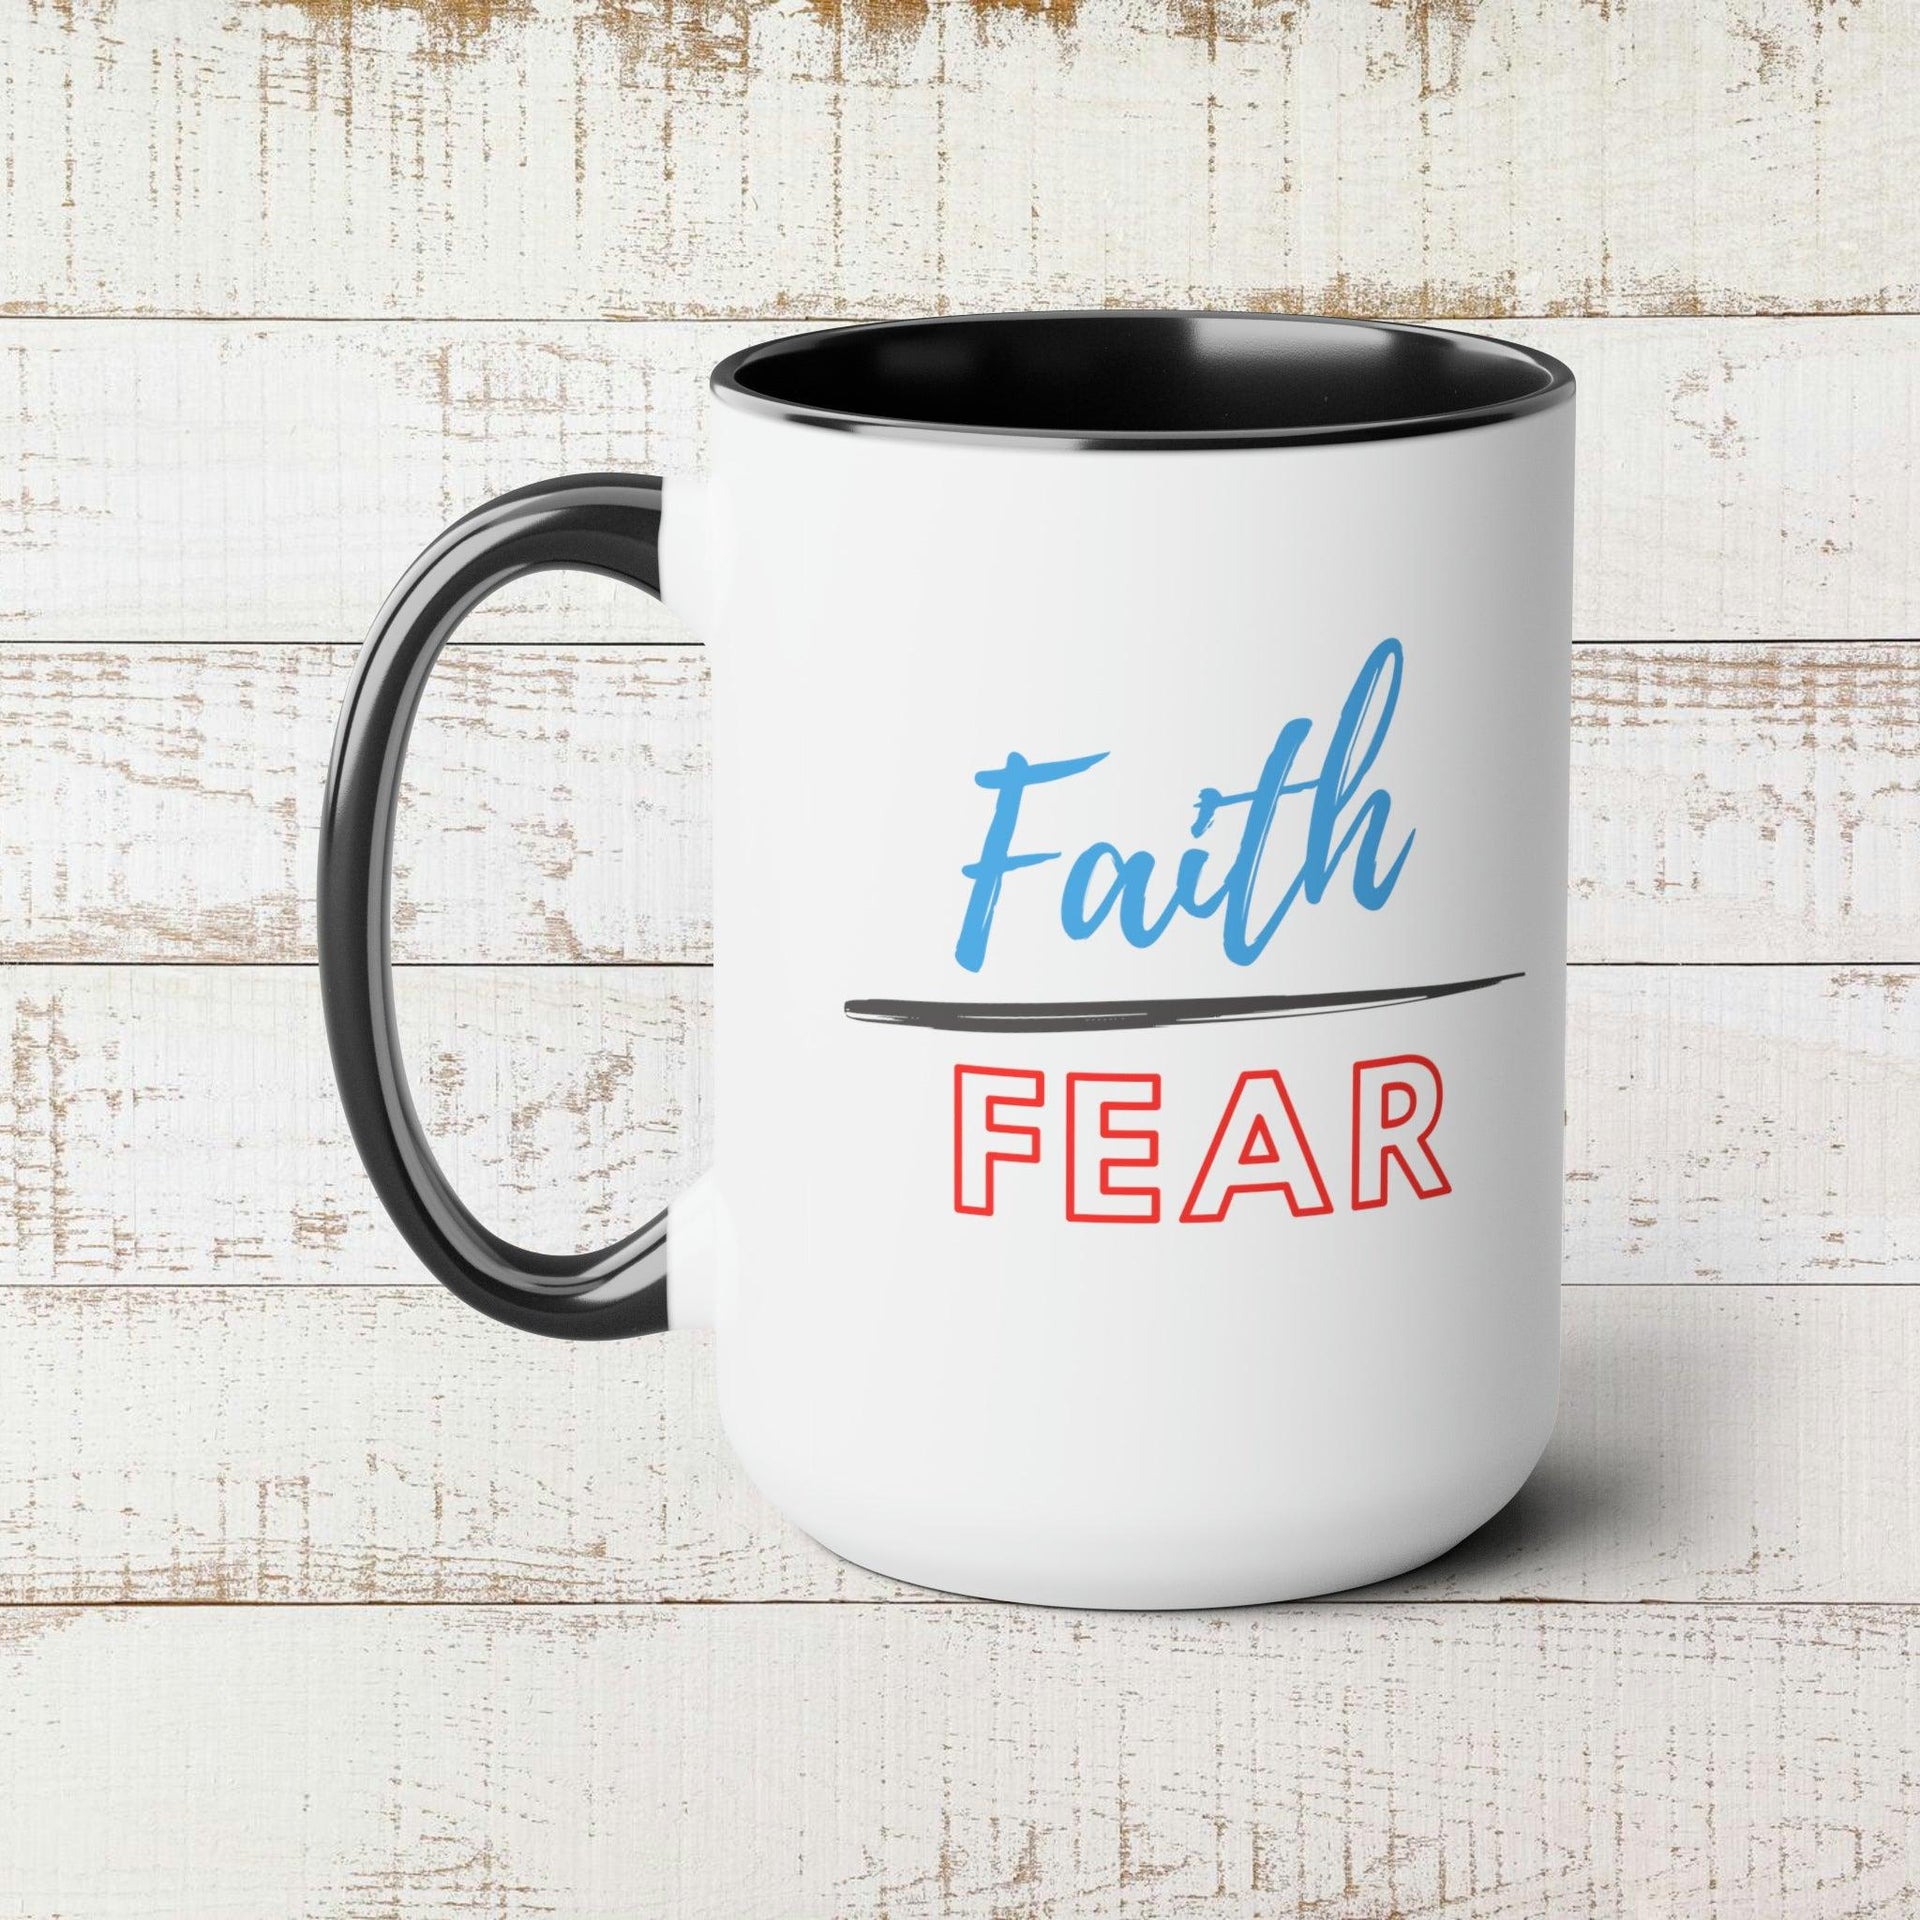 Faith Over Fear Two-Tone Coffee Mug, 15oz - God's Girl Gifts And Apparel